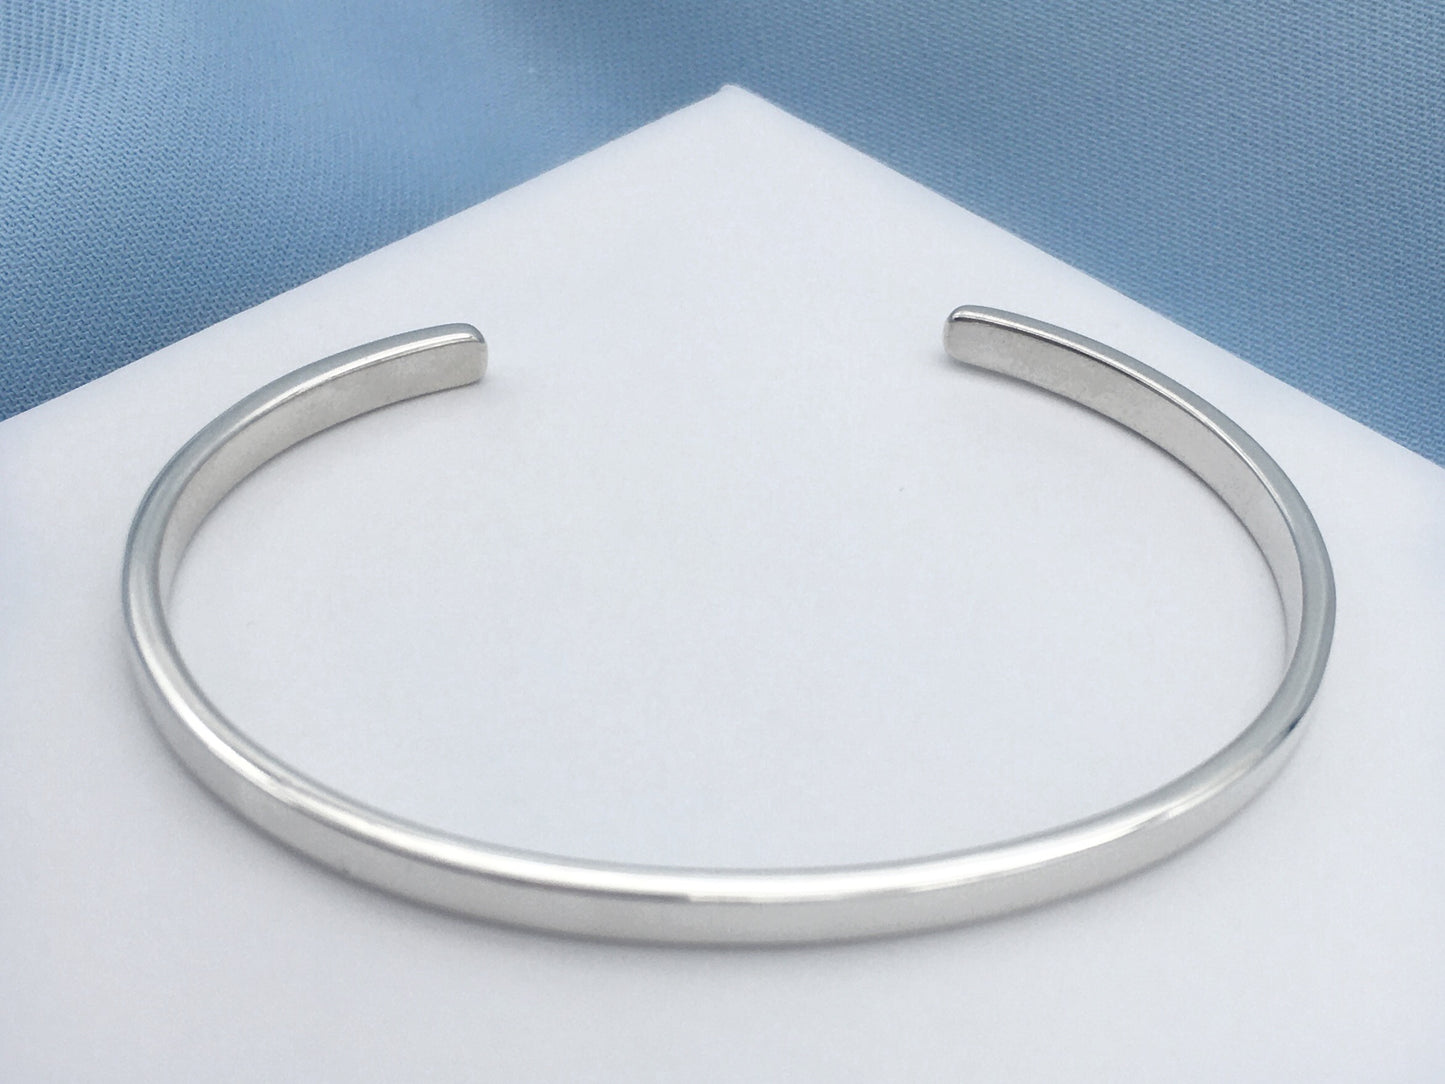 C Bangle - A Simple Silver Cuff Bangle Bracelet